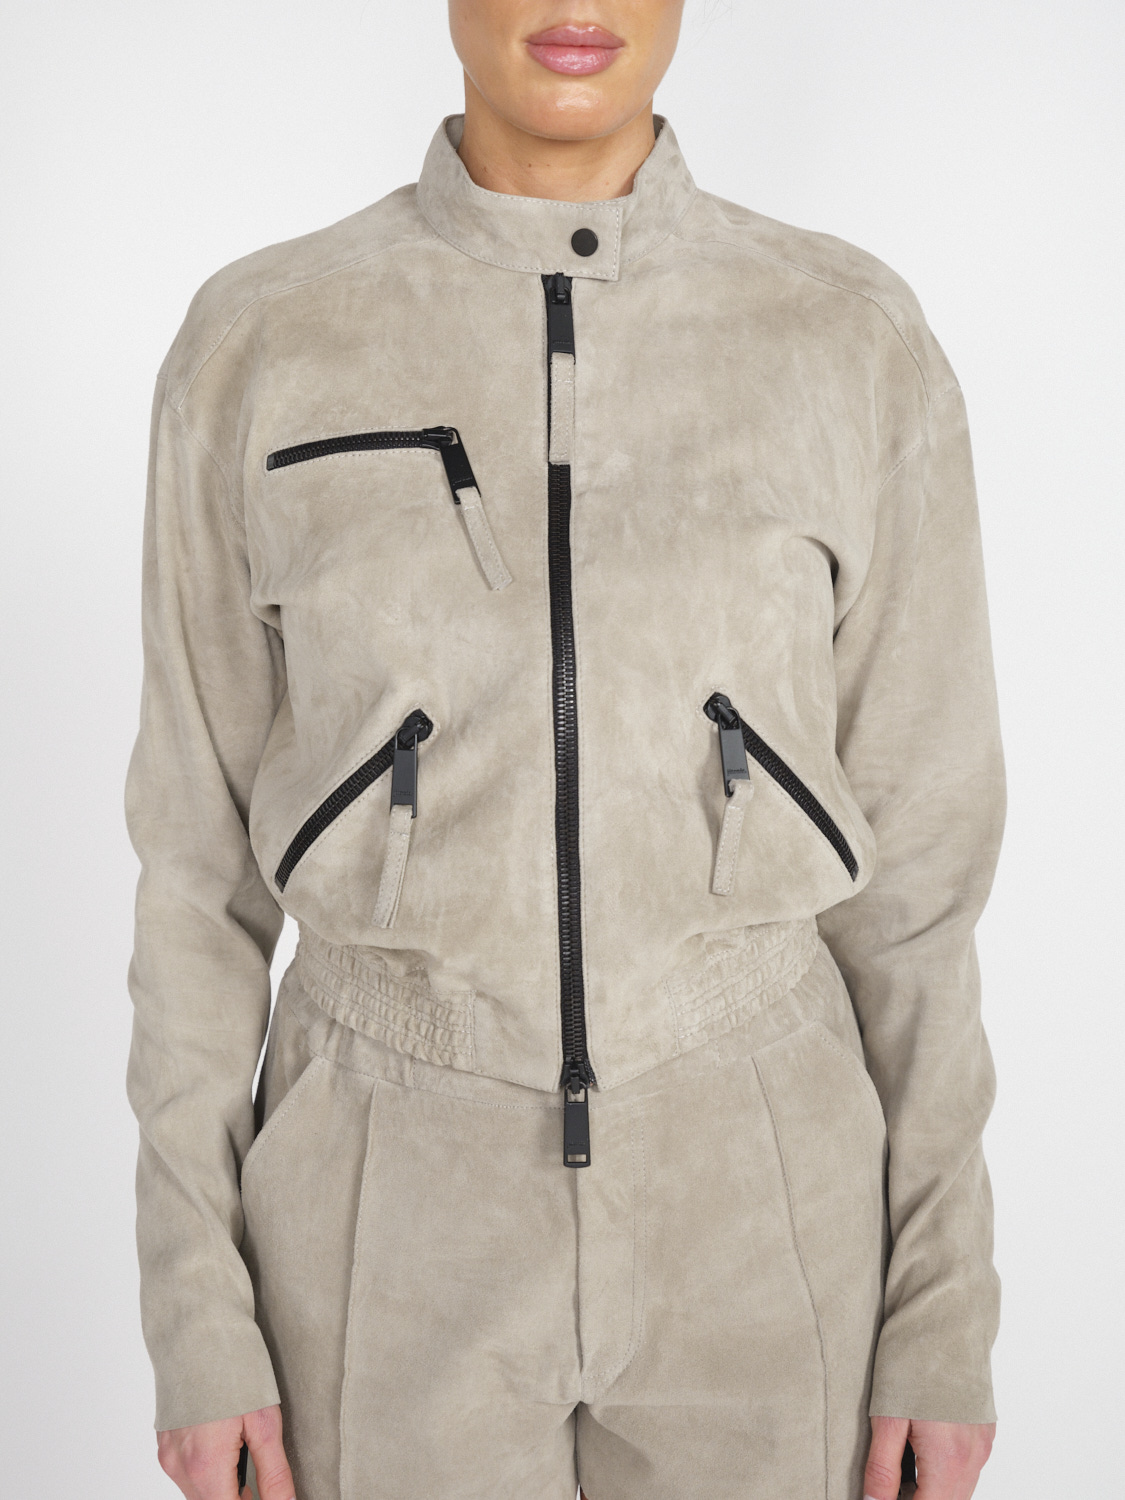 Blof – Stretchige Veloursleder-Jacke mit schwarzen Zippern 